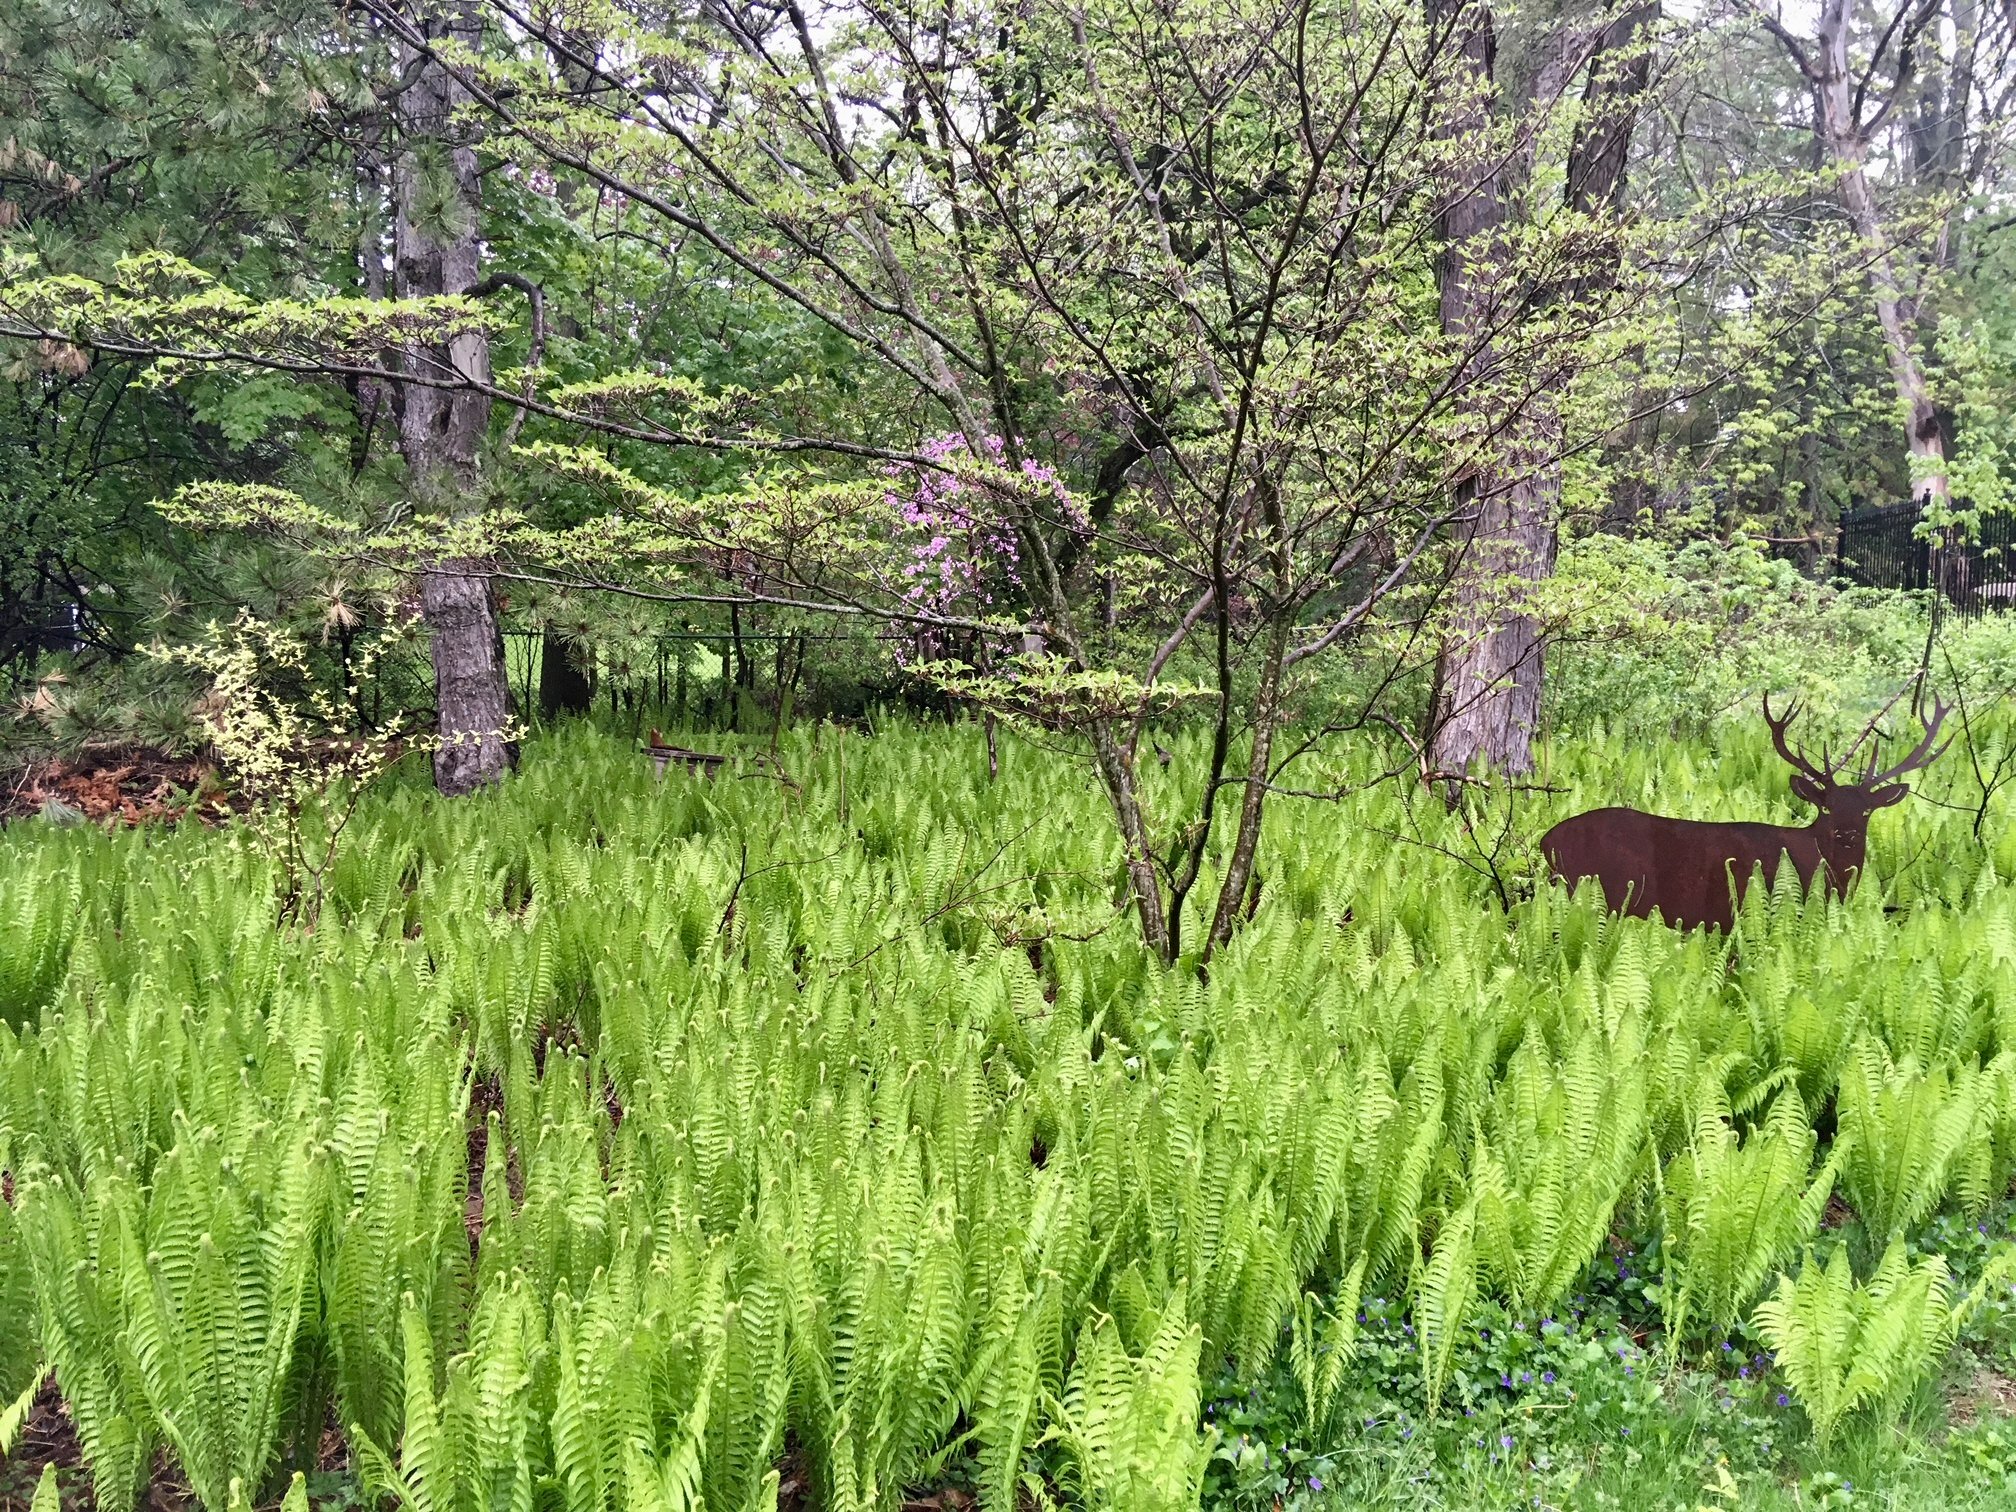 A Cornus Kousa dogwood, Cornus Mas and a Redbud emerge through the ferns in early spring in this woodland shade garden.